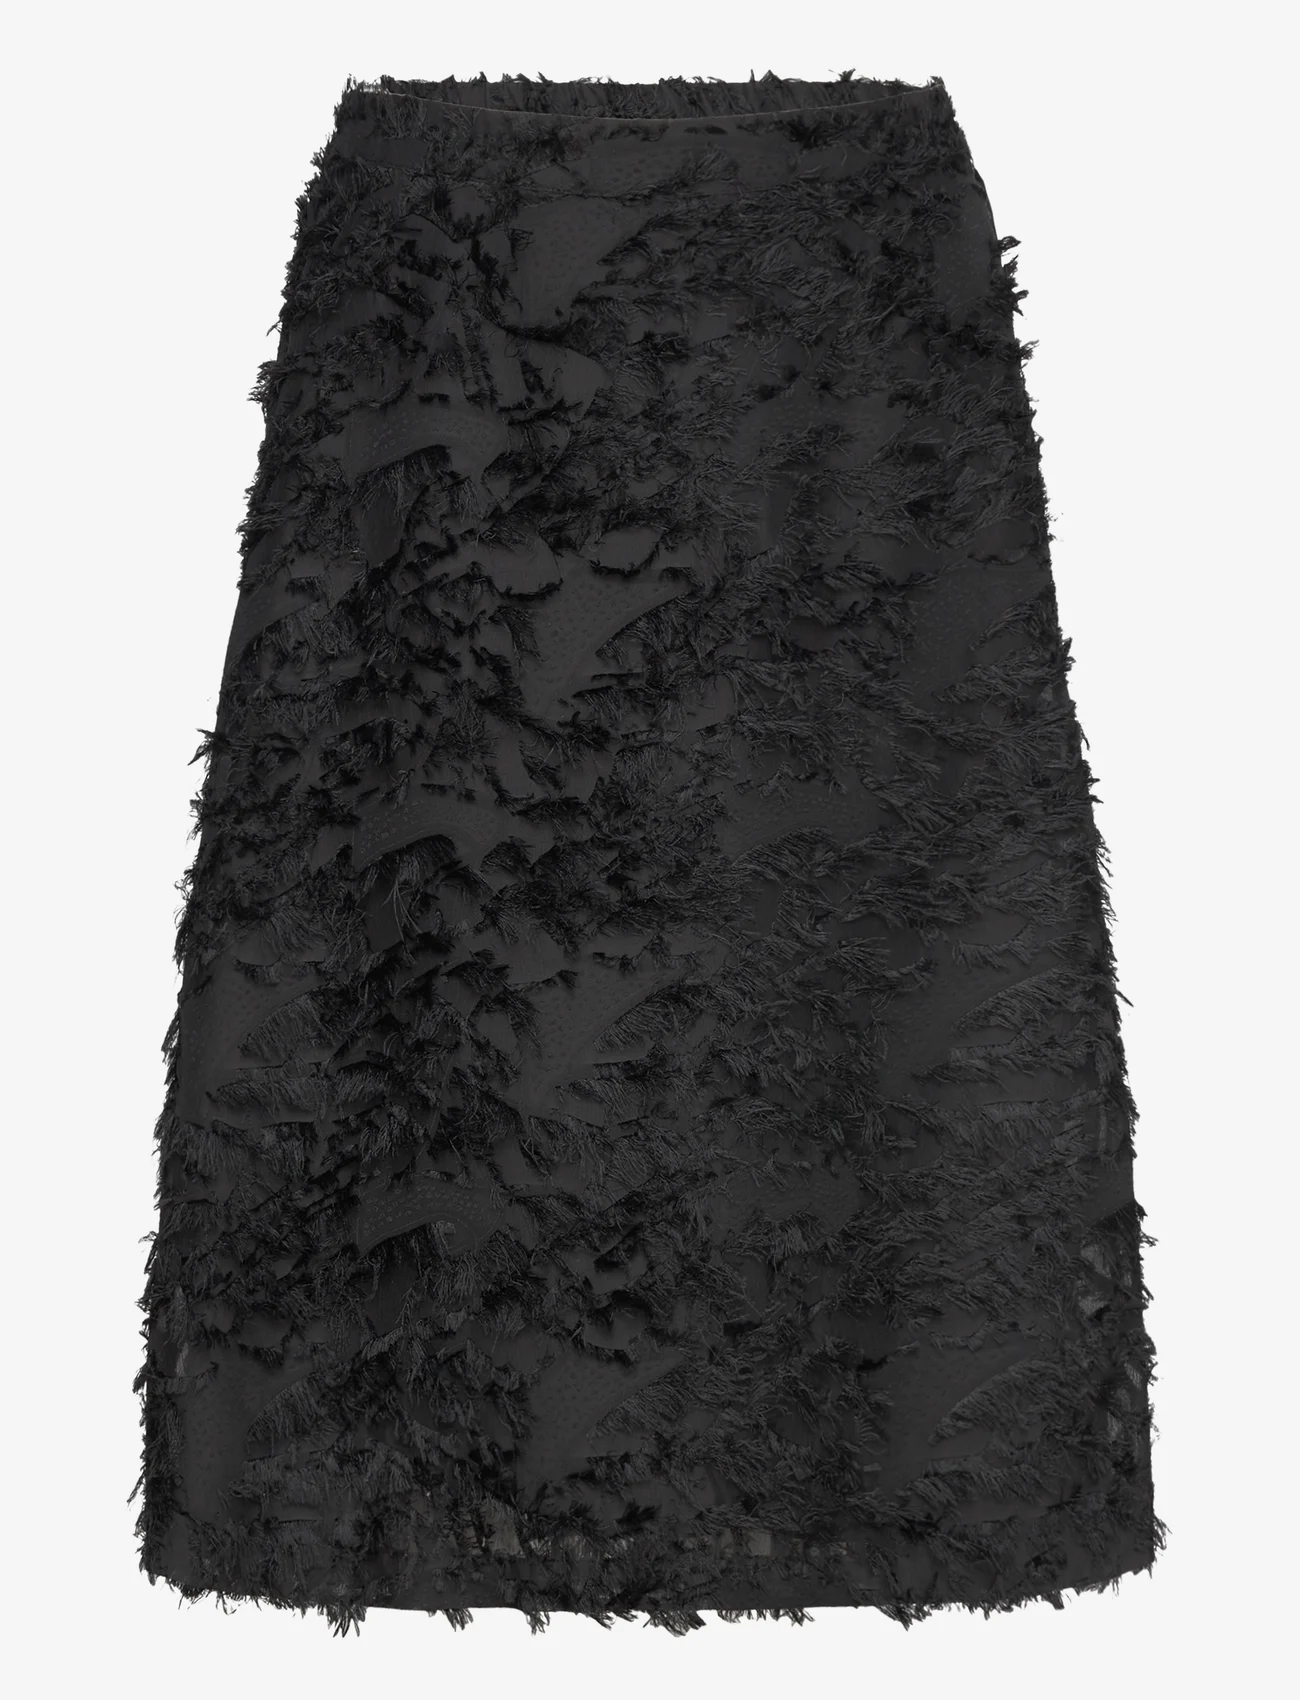 Soaked in Luxury - SLZienna Skirt - midiskjørt - black - 0